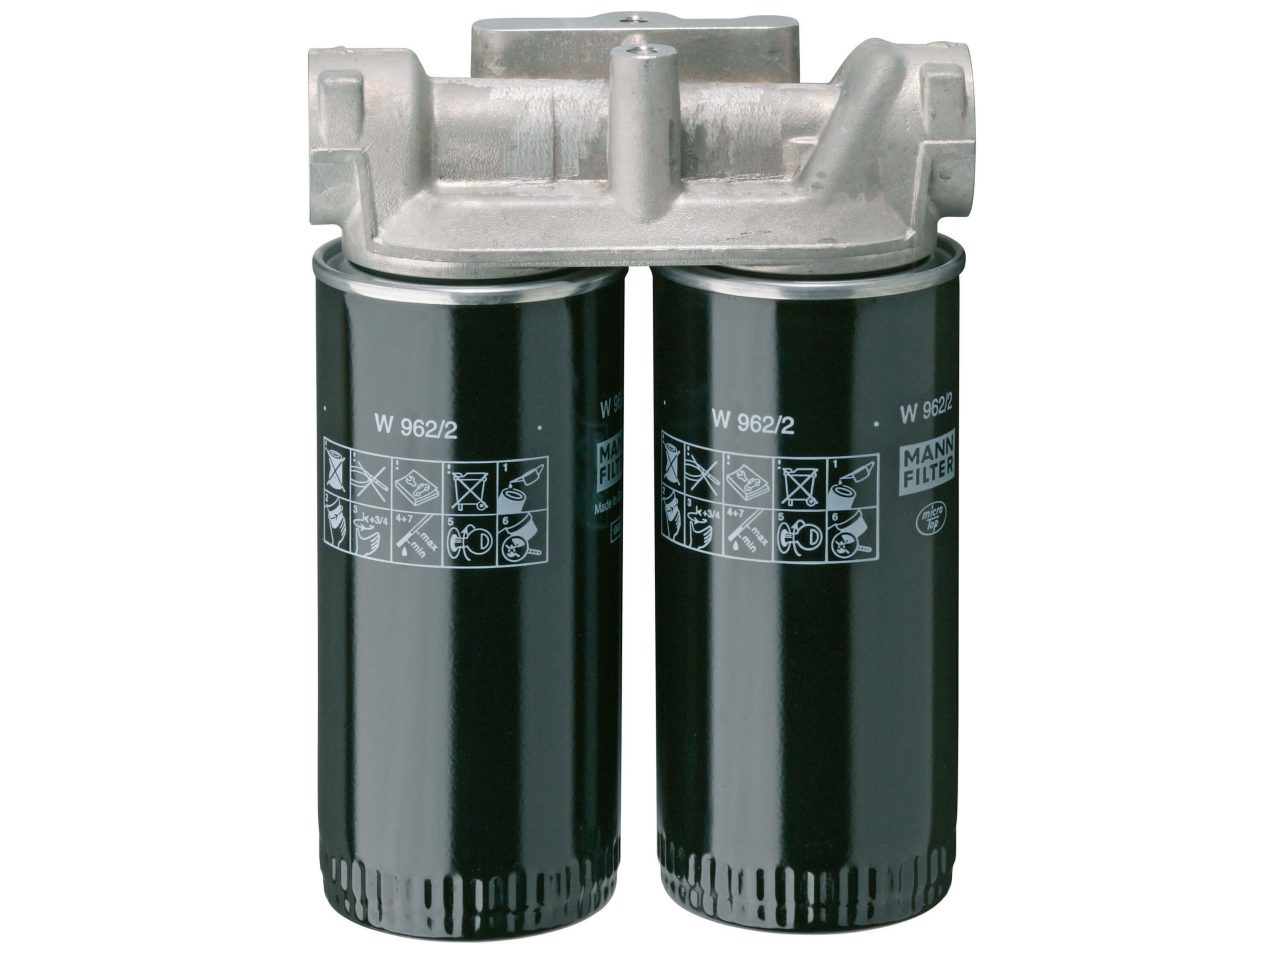 Industrial filter: versatile oil filters